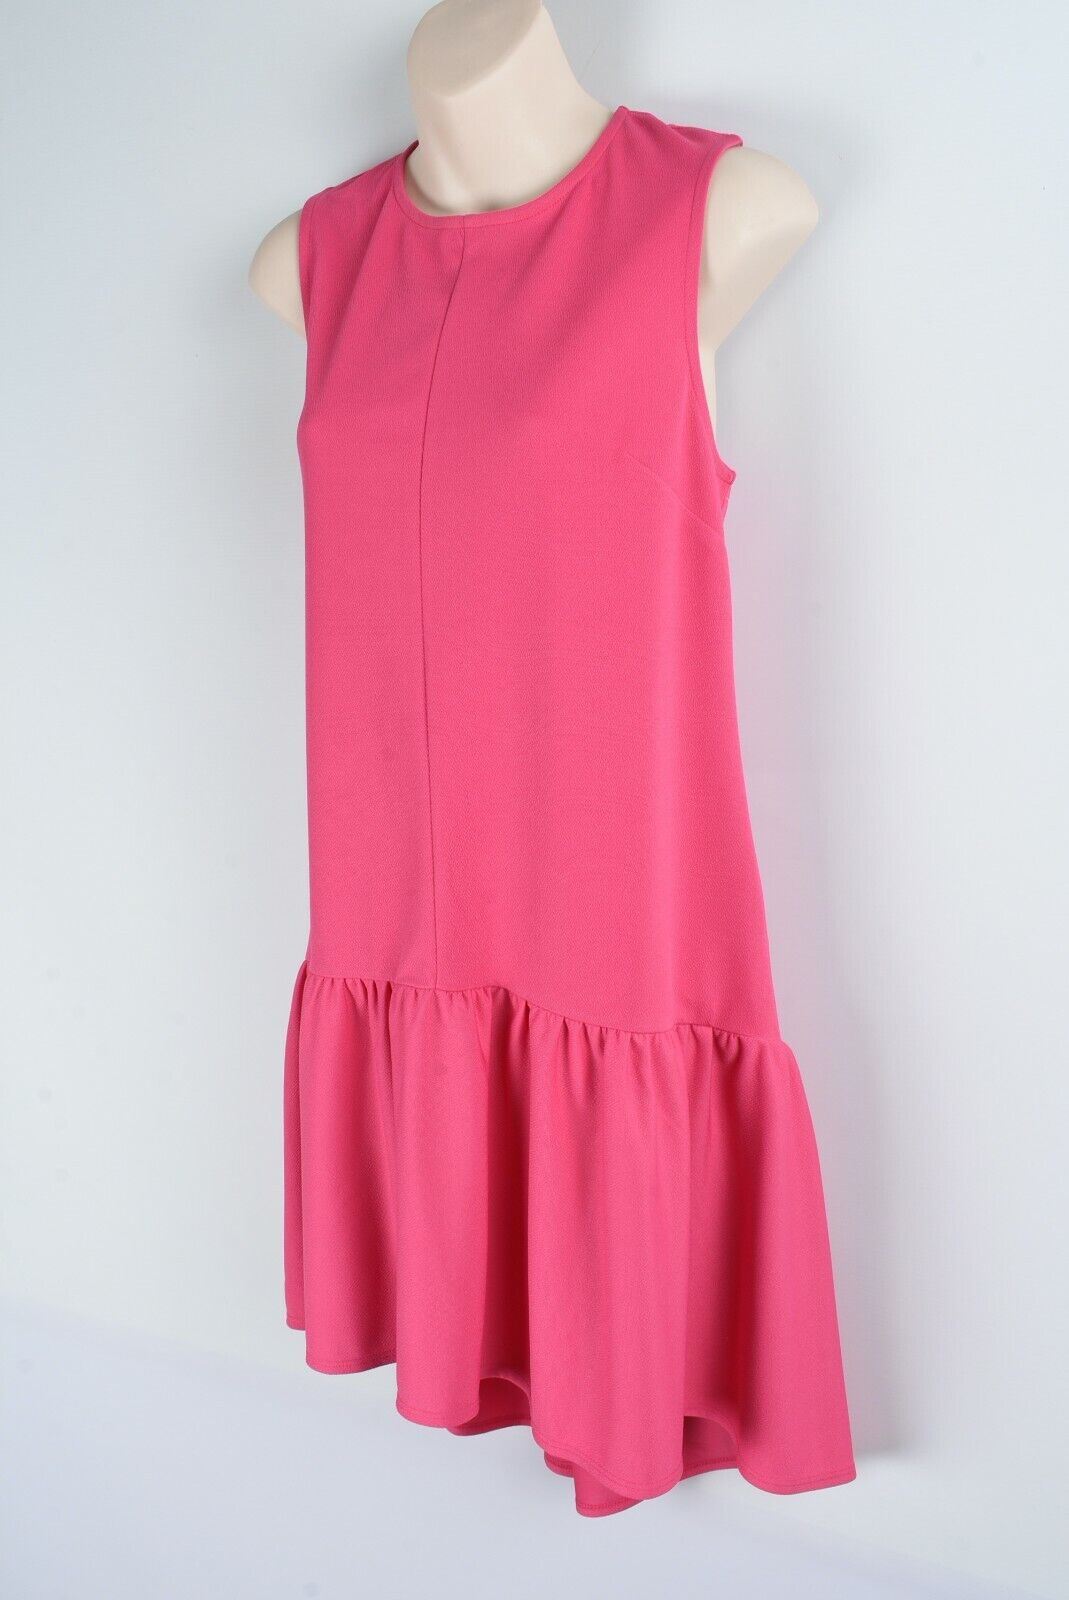 MISS SELFRIDGE Women's Hot Pink Frill Hem Dress, size UK 12